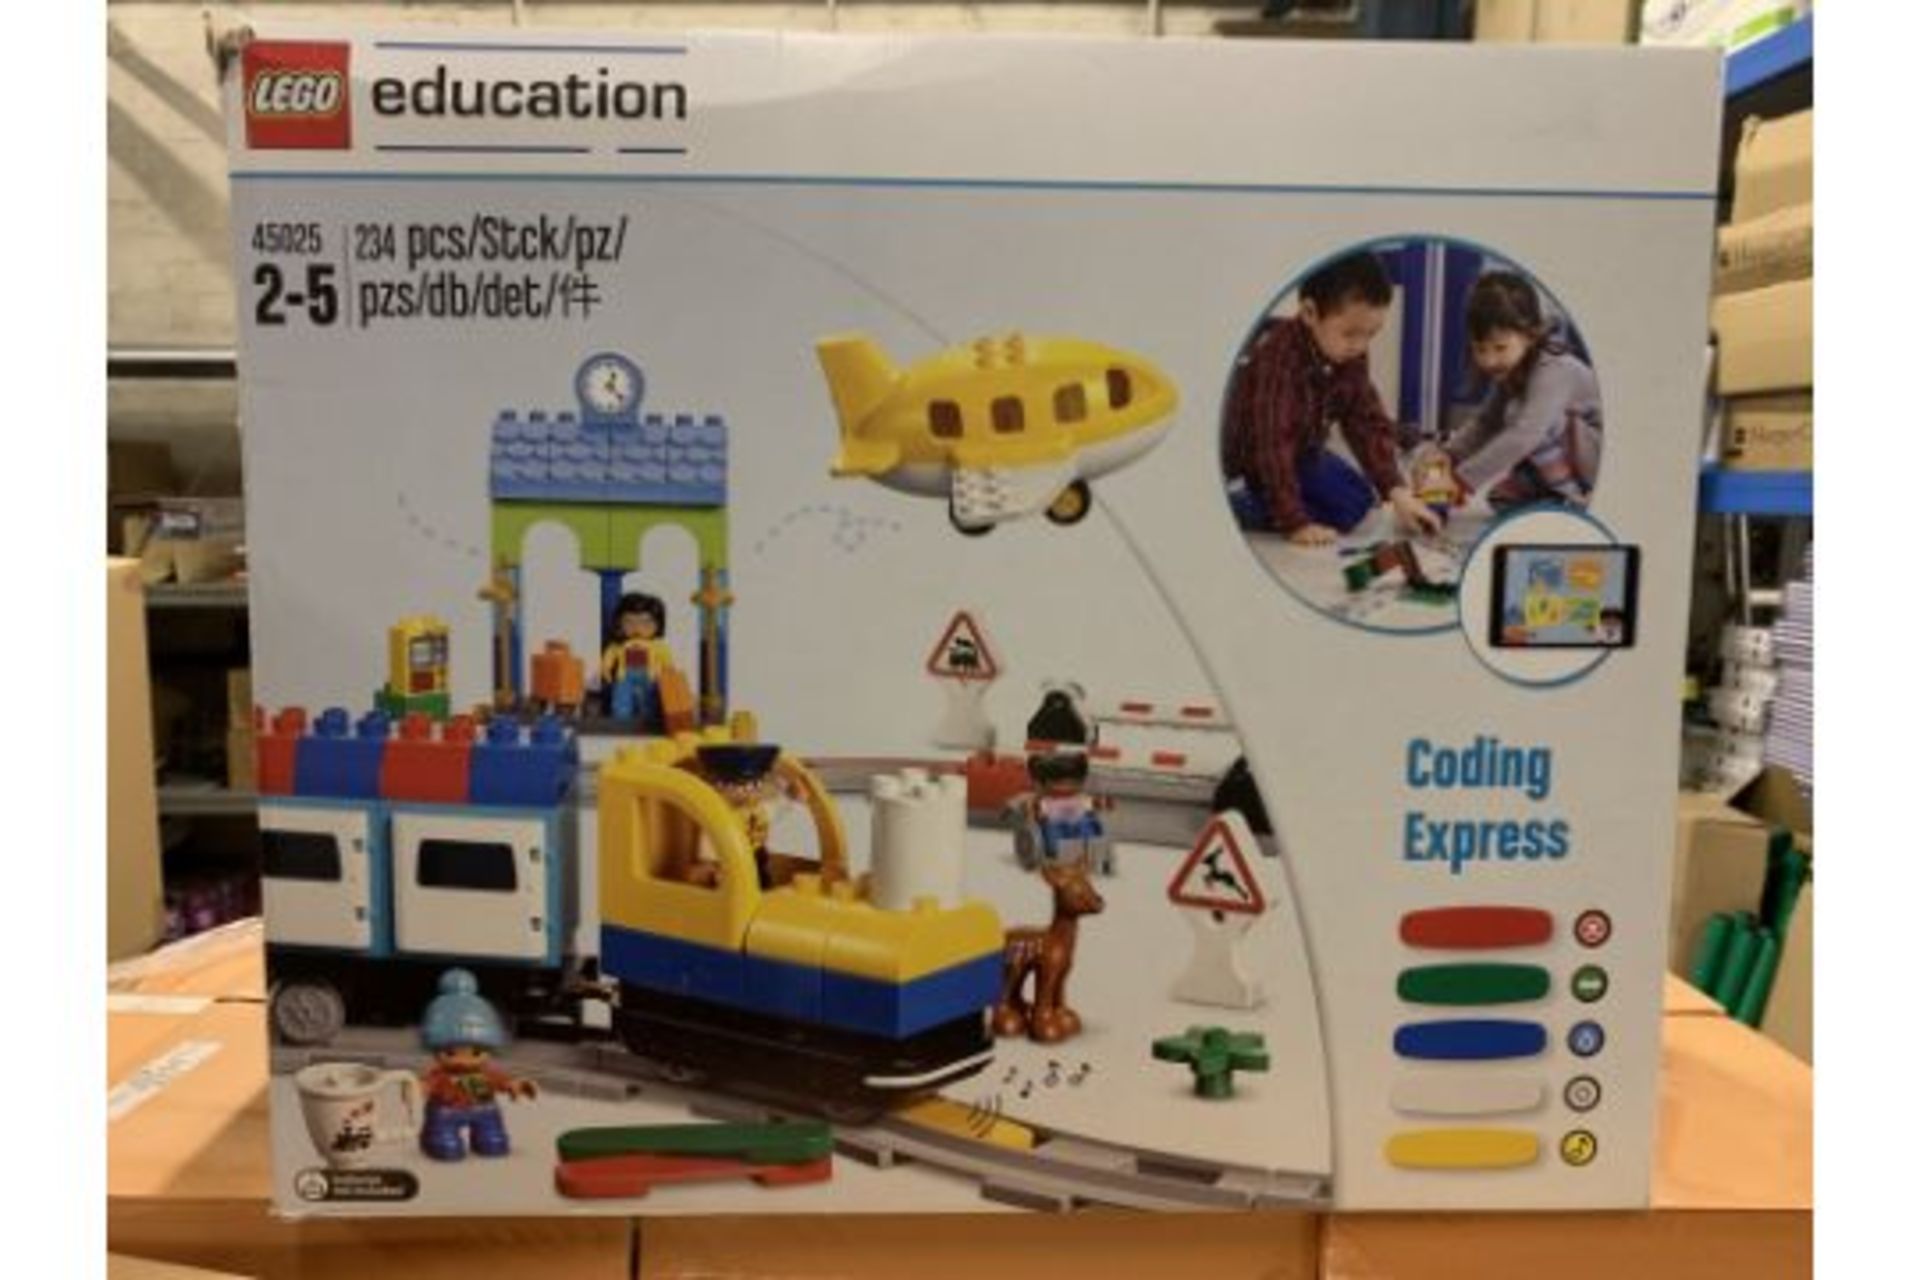 BRAND NEW LEGO EDUCATIONAL 234 PIECE CODING EXPRESS SET